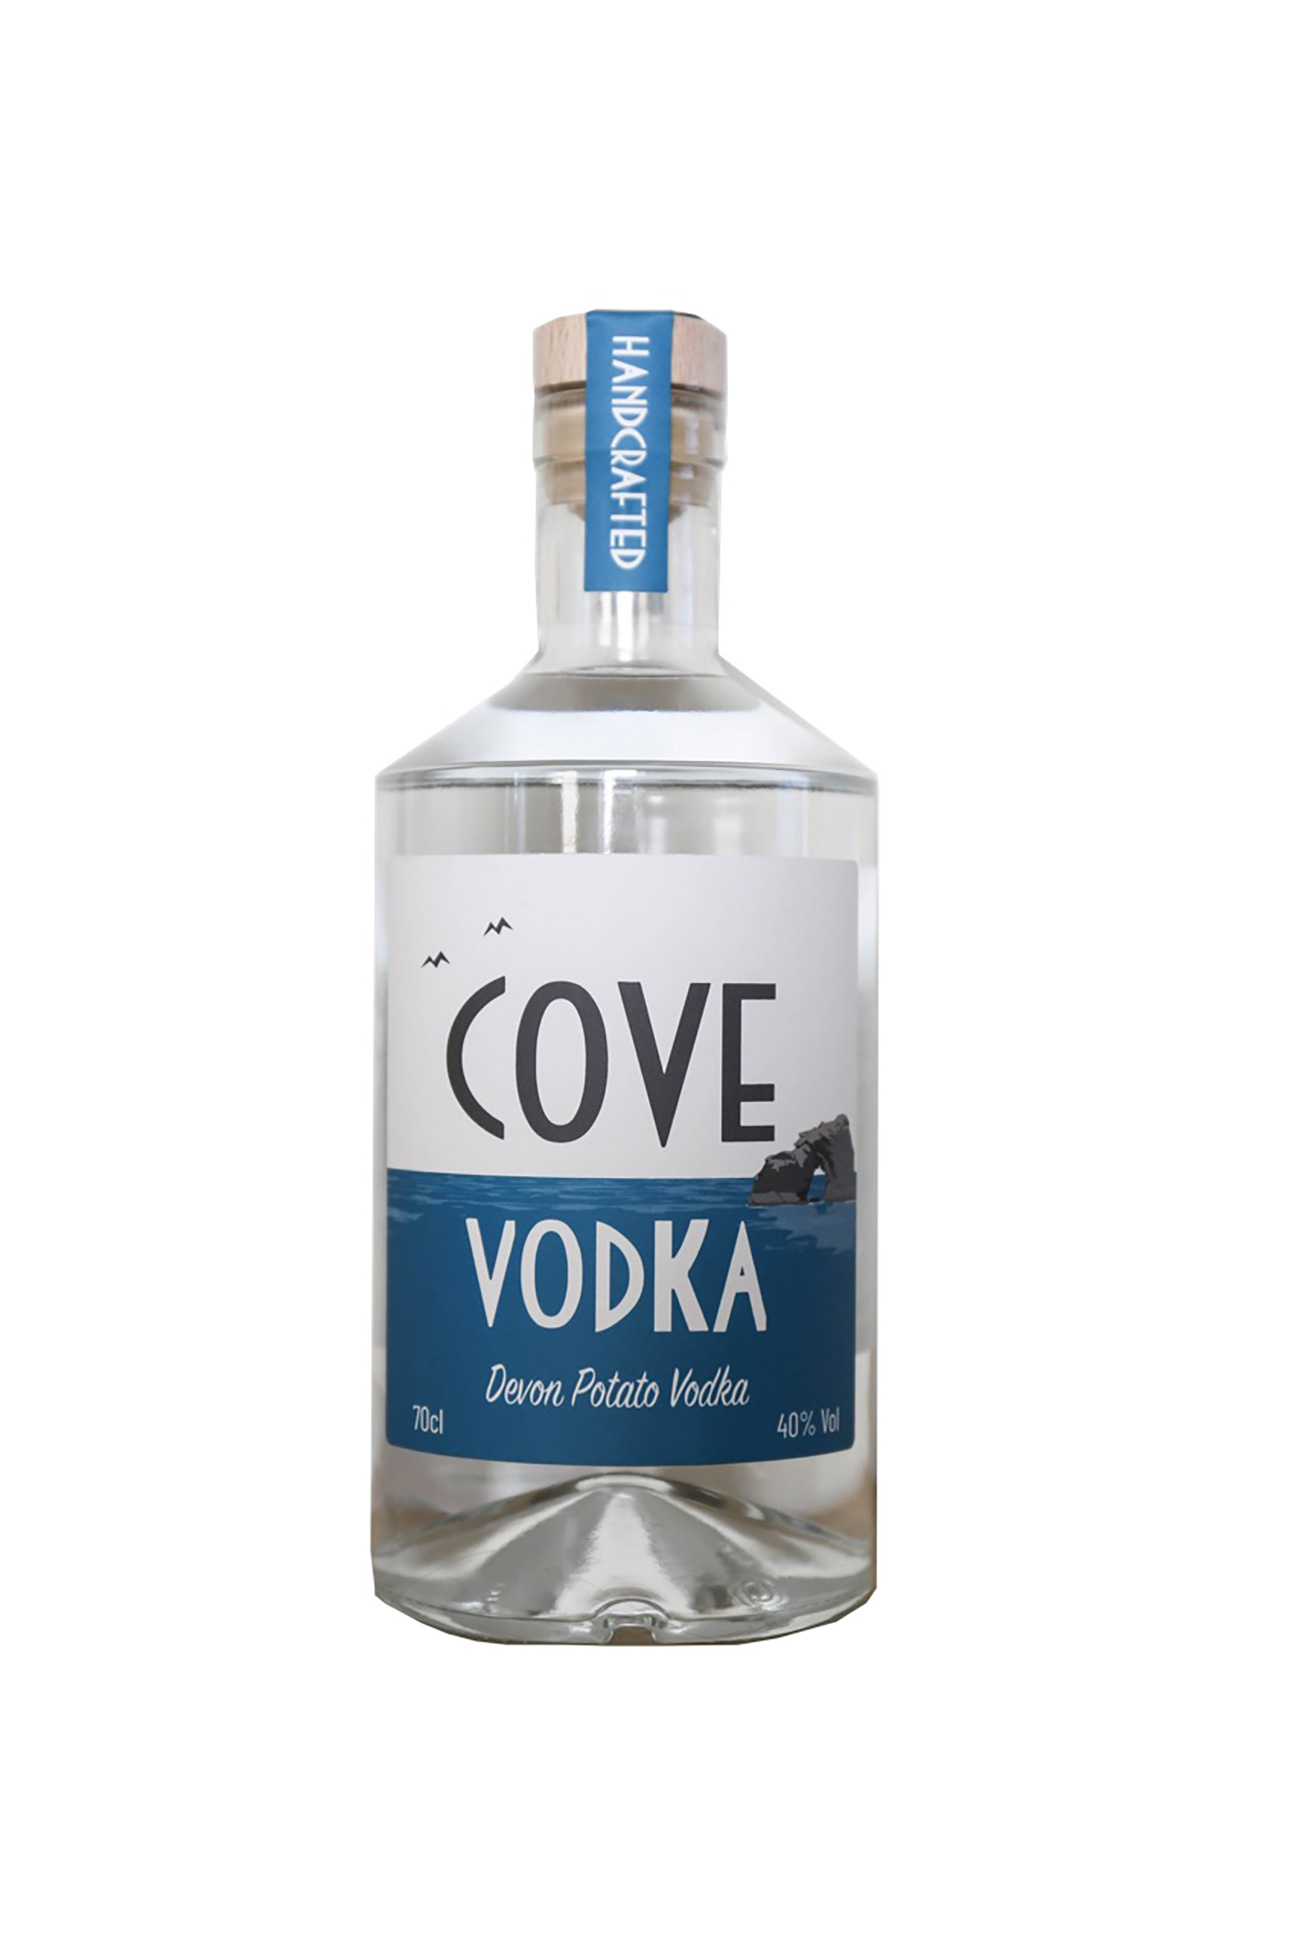 Cove Vodka Devon Wedding Produce1